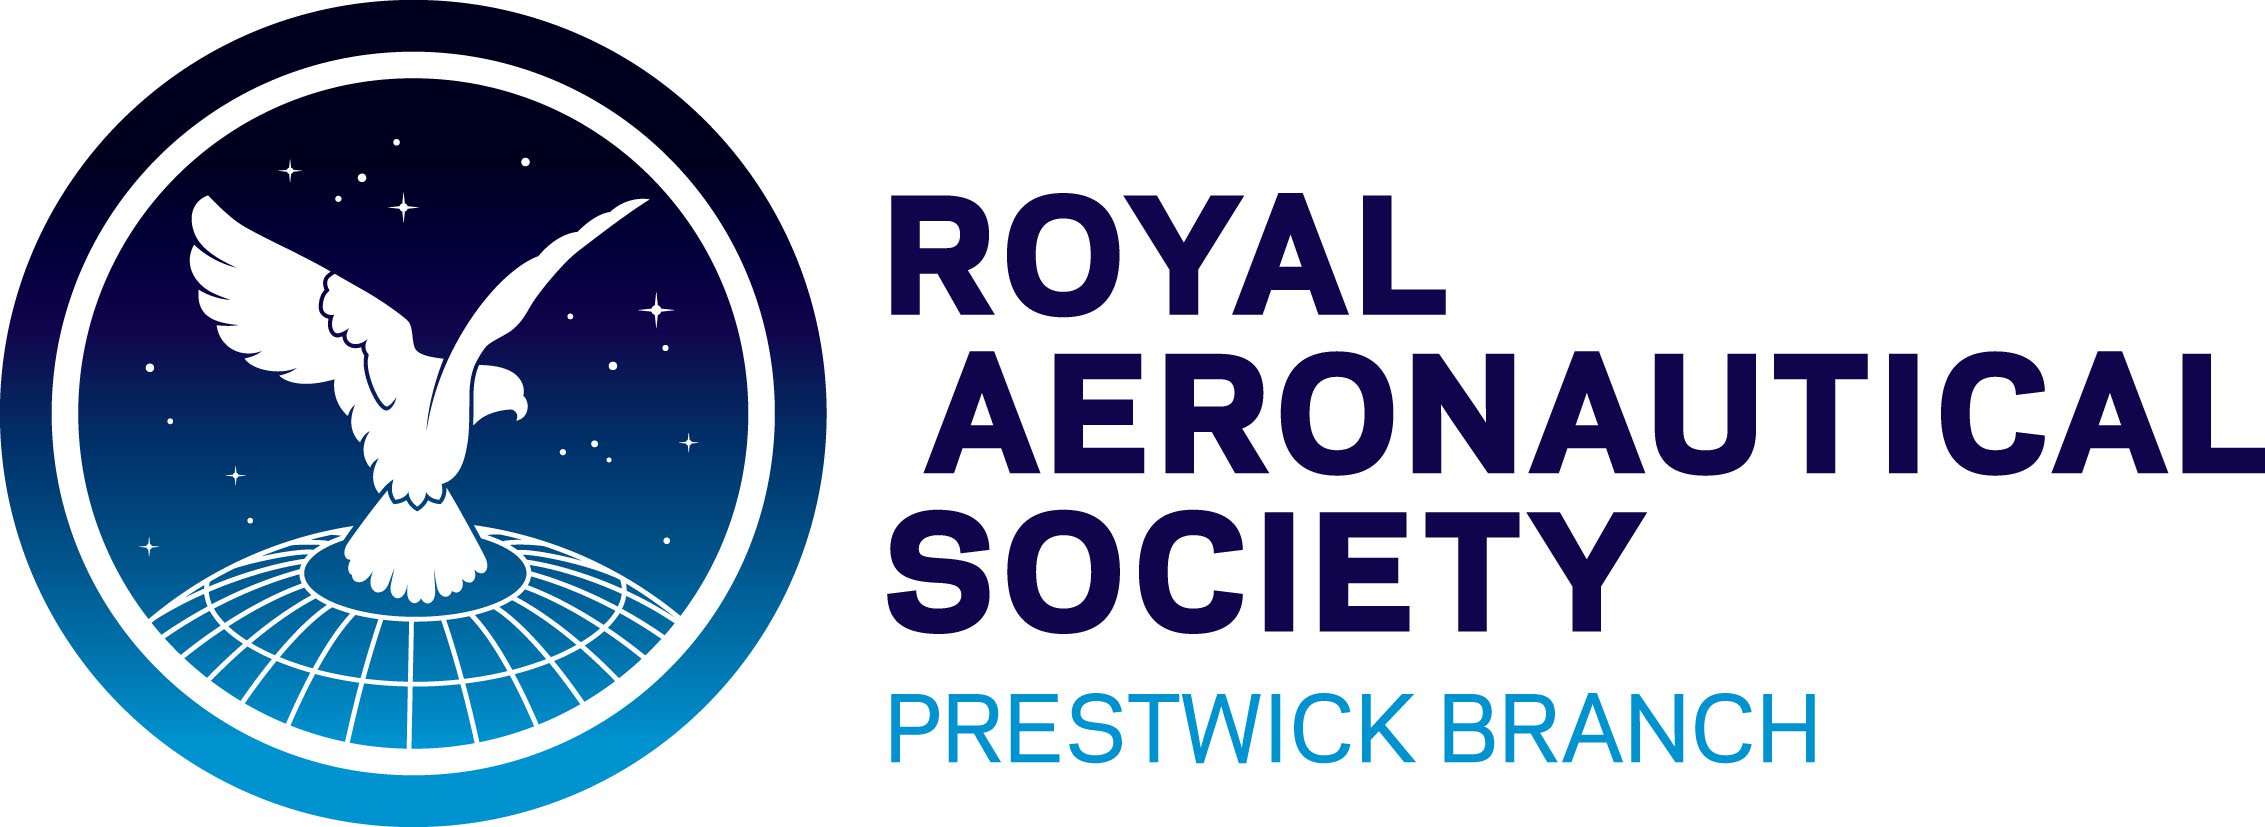 Prestwick Branch of the Royal Aeronautical Society